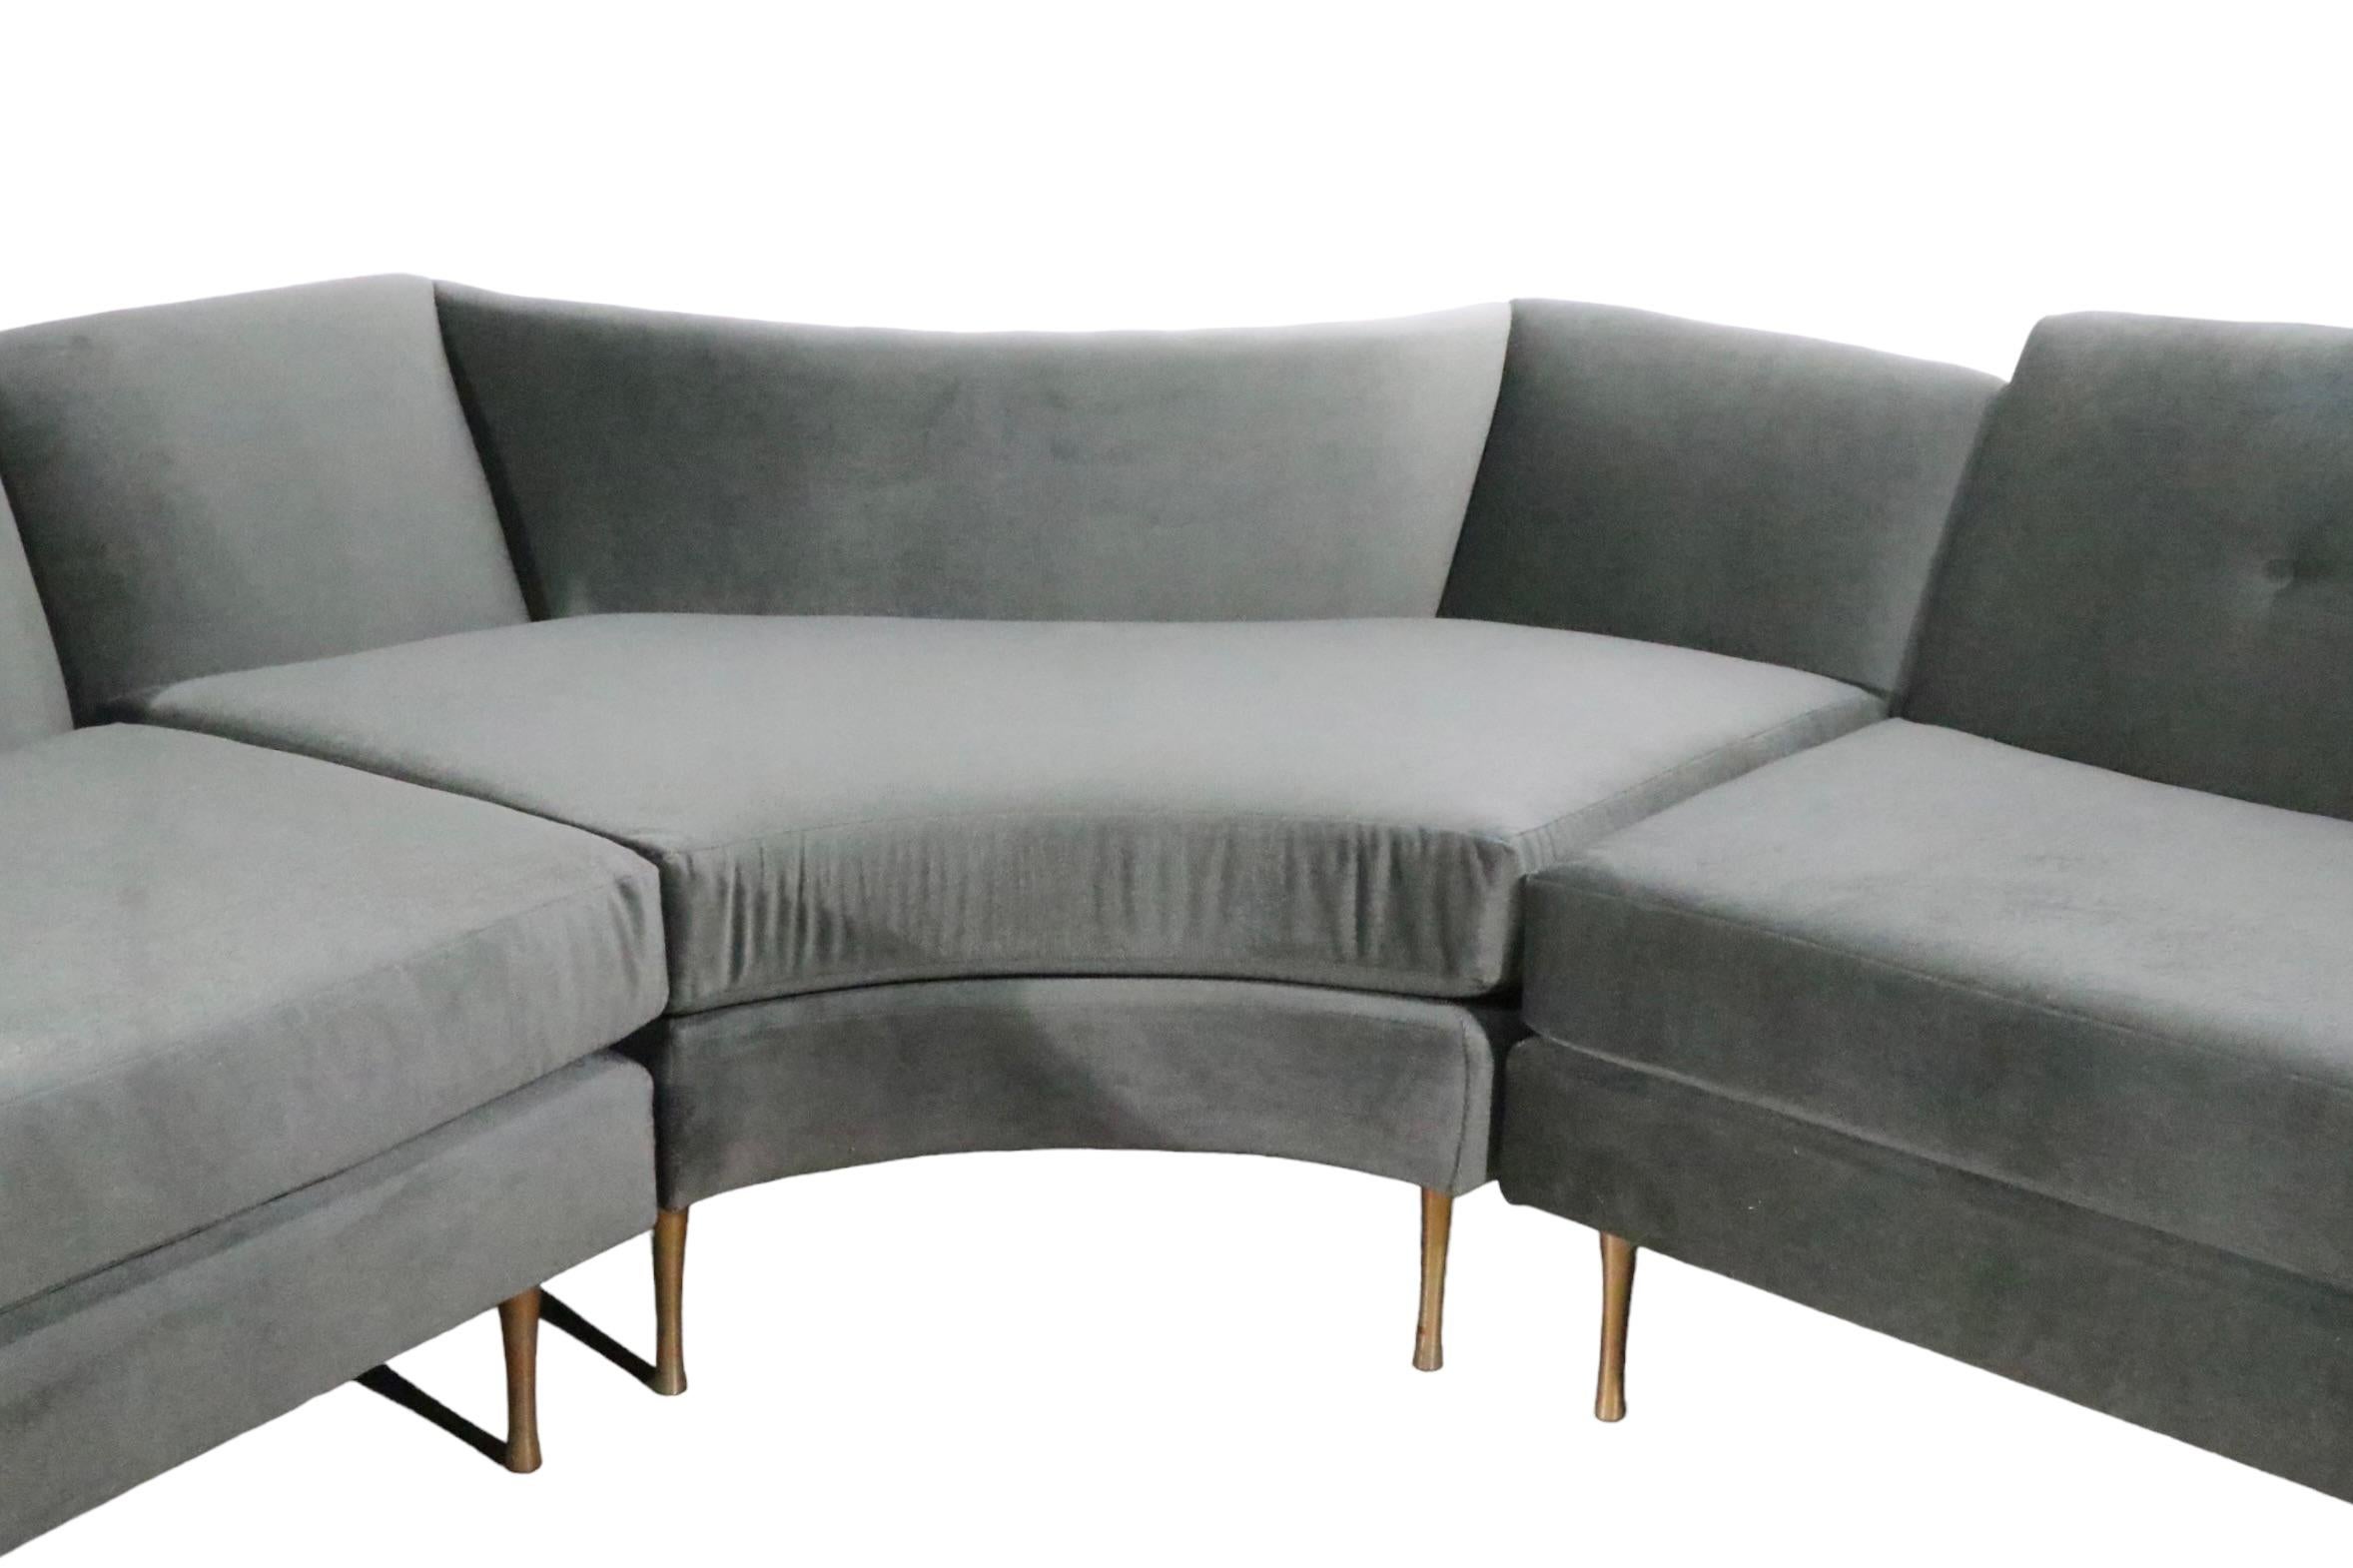 1950s sectional sofa